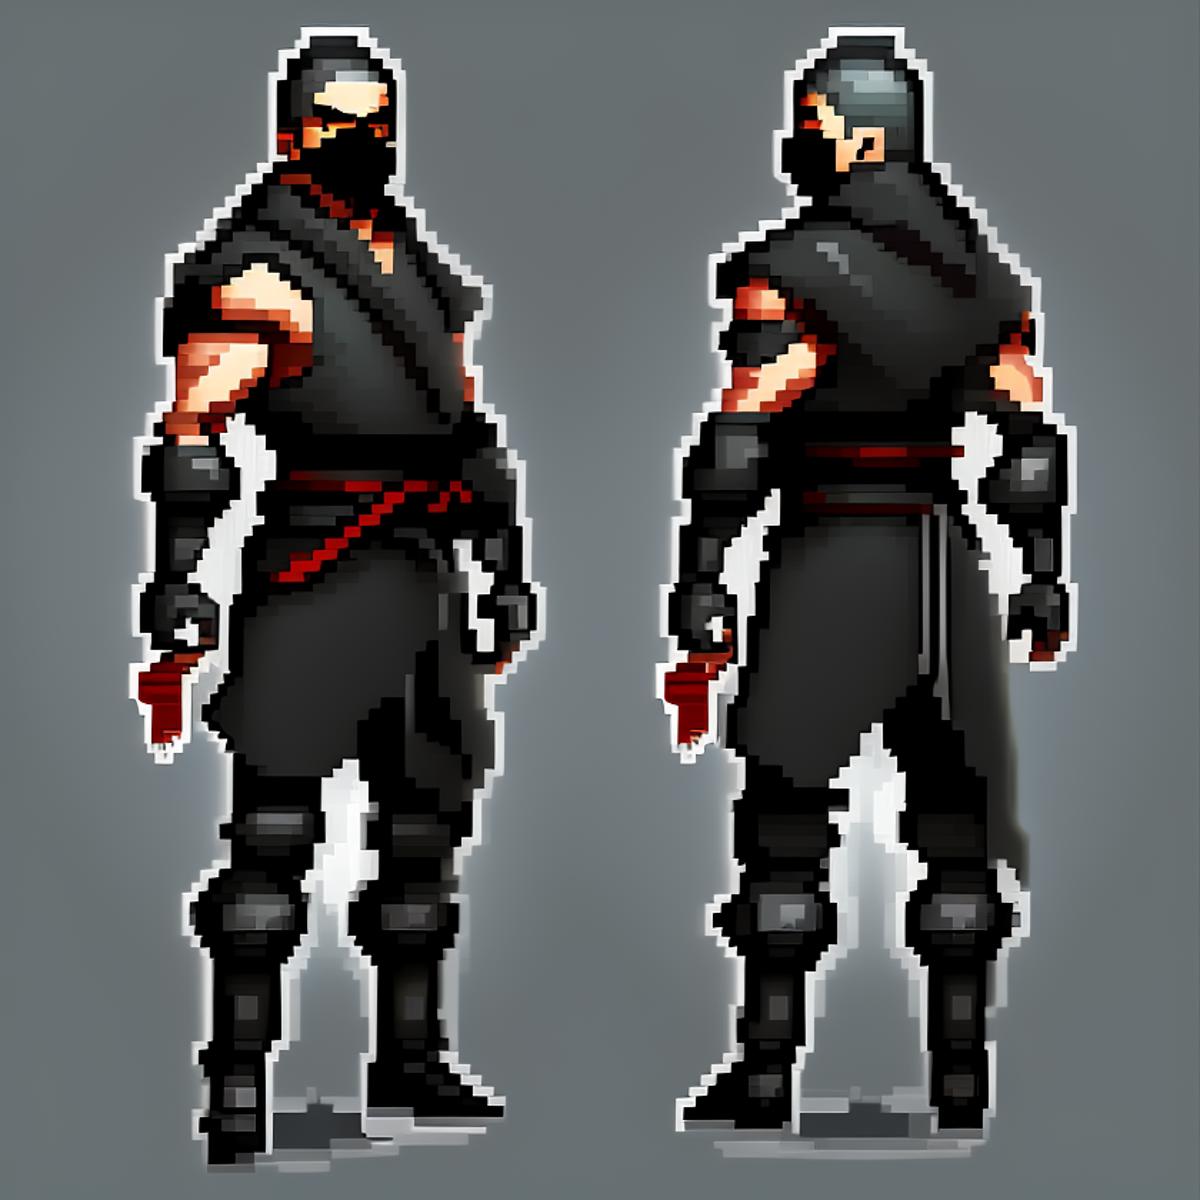 ninja mask concept art